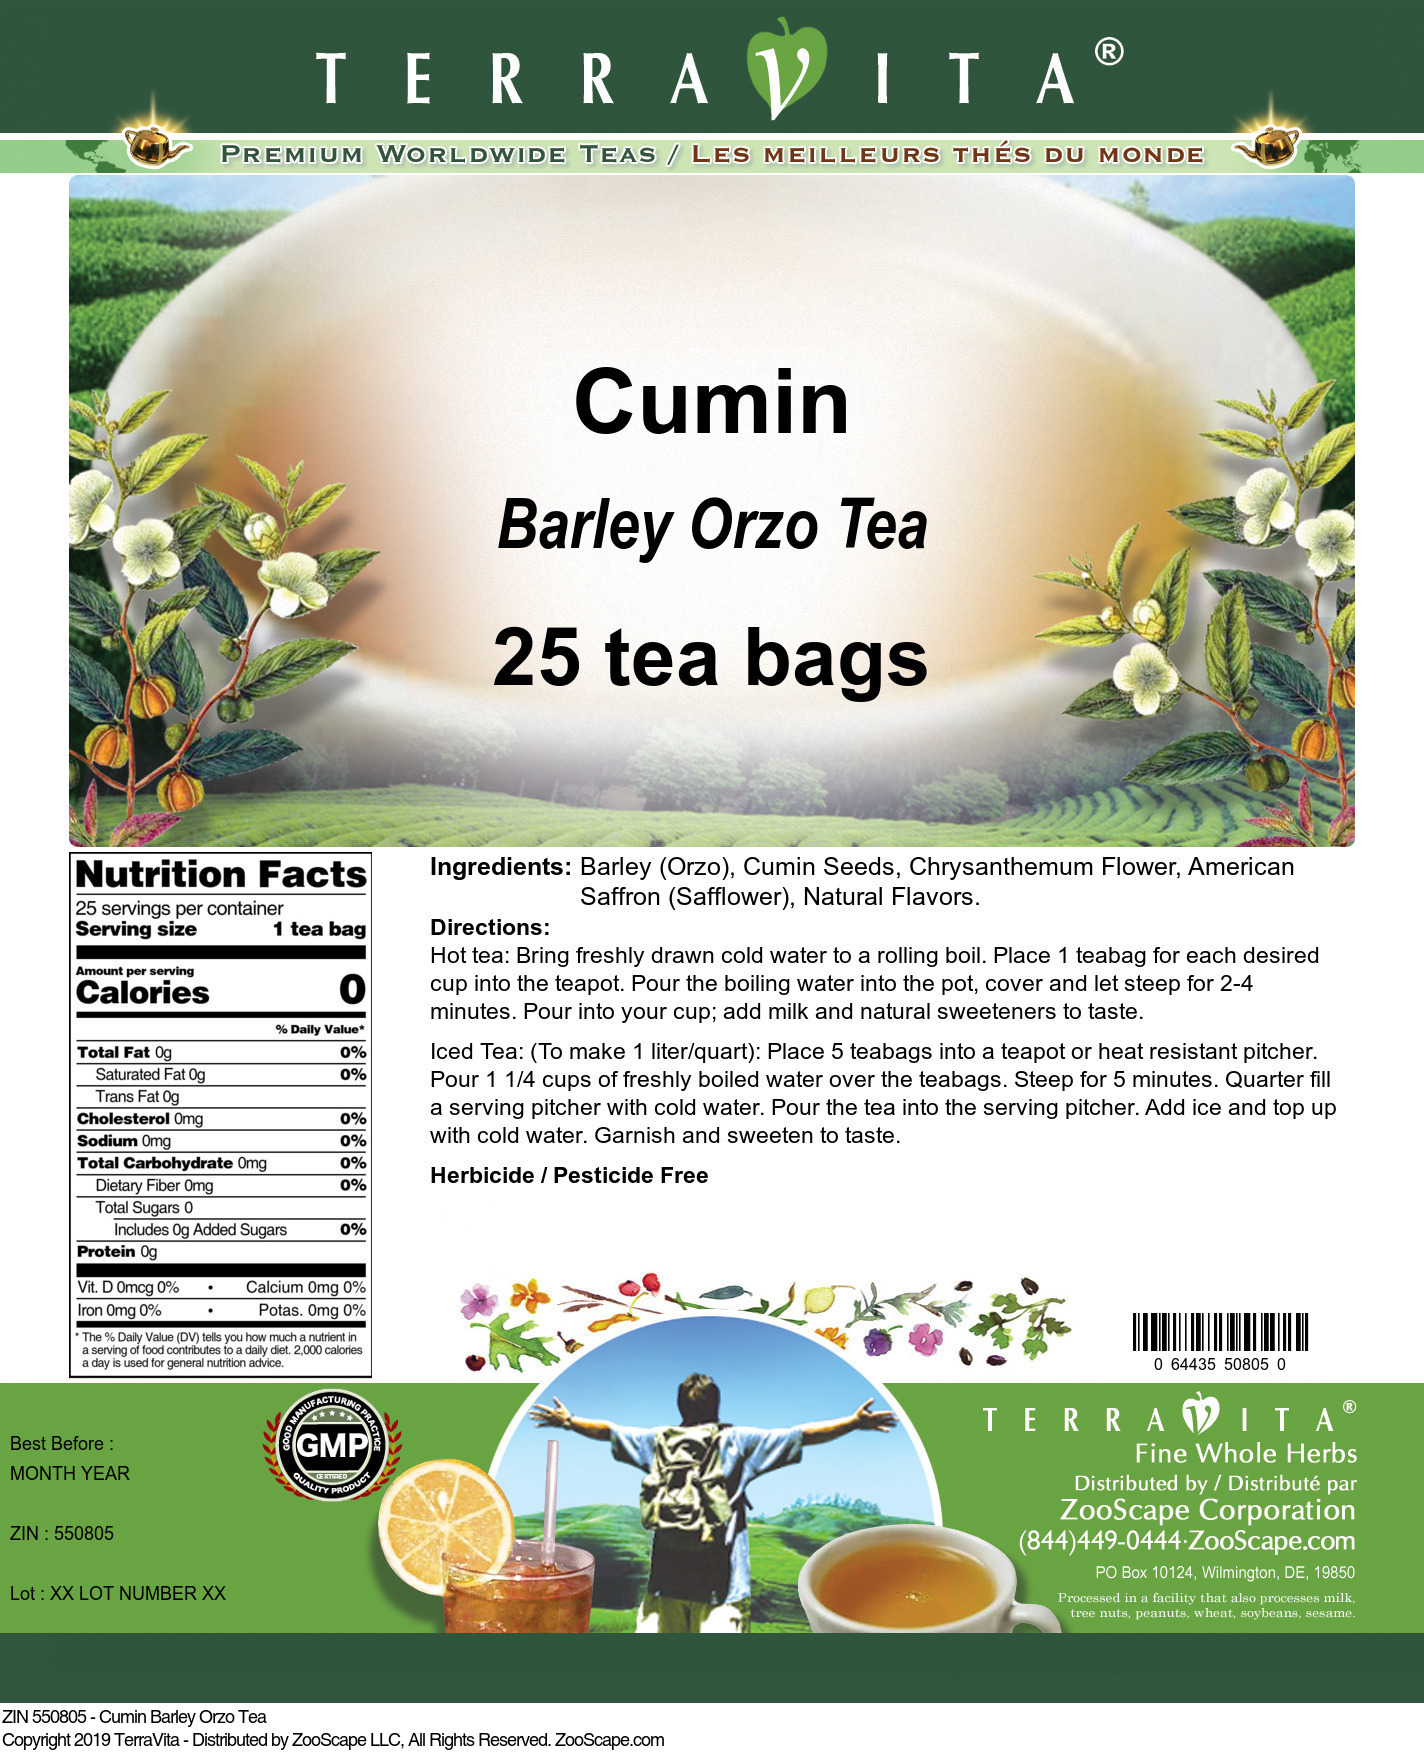 Cumin Barley Orzo Tea - Label